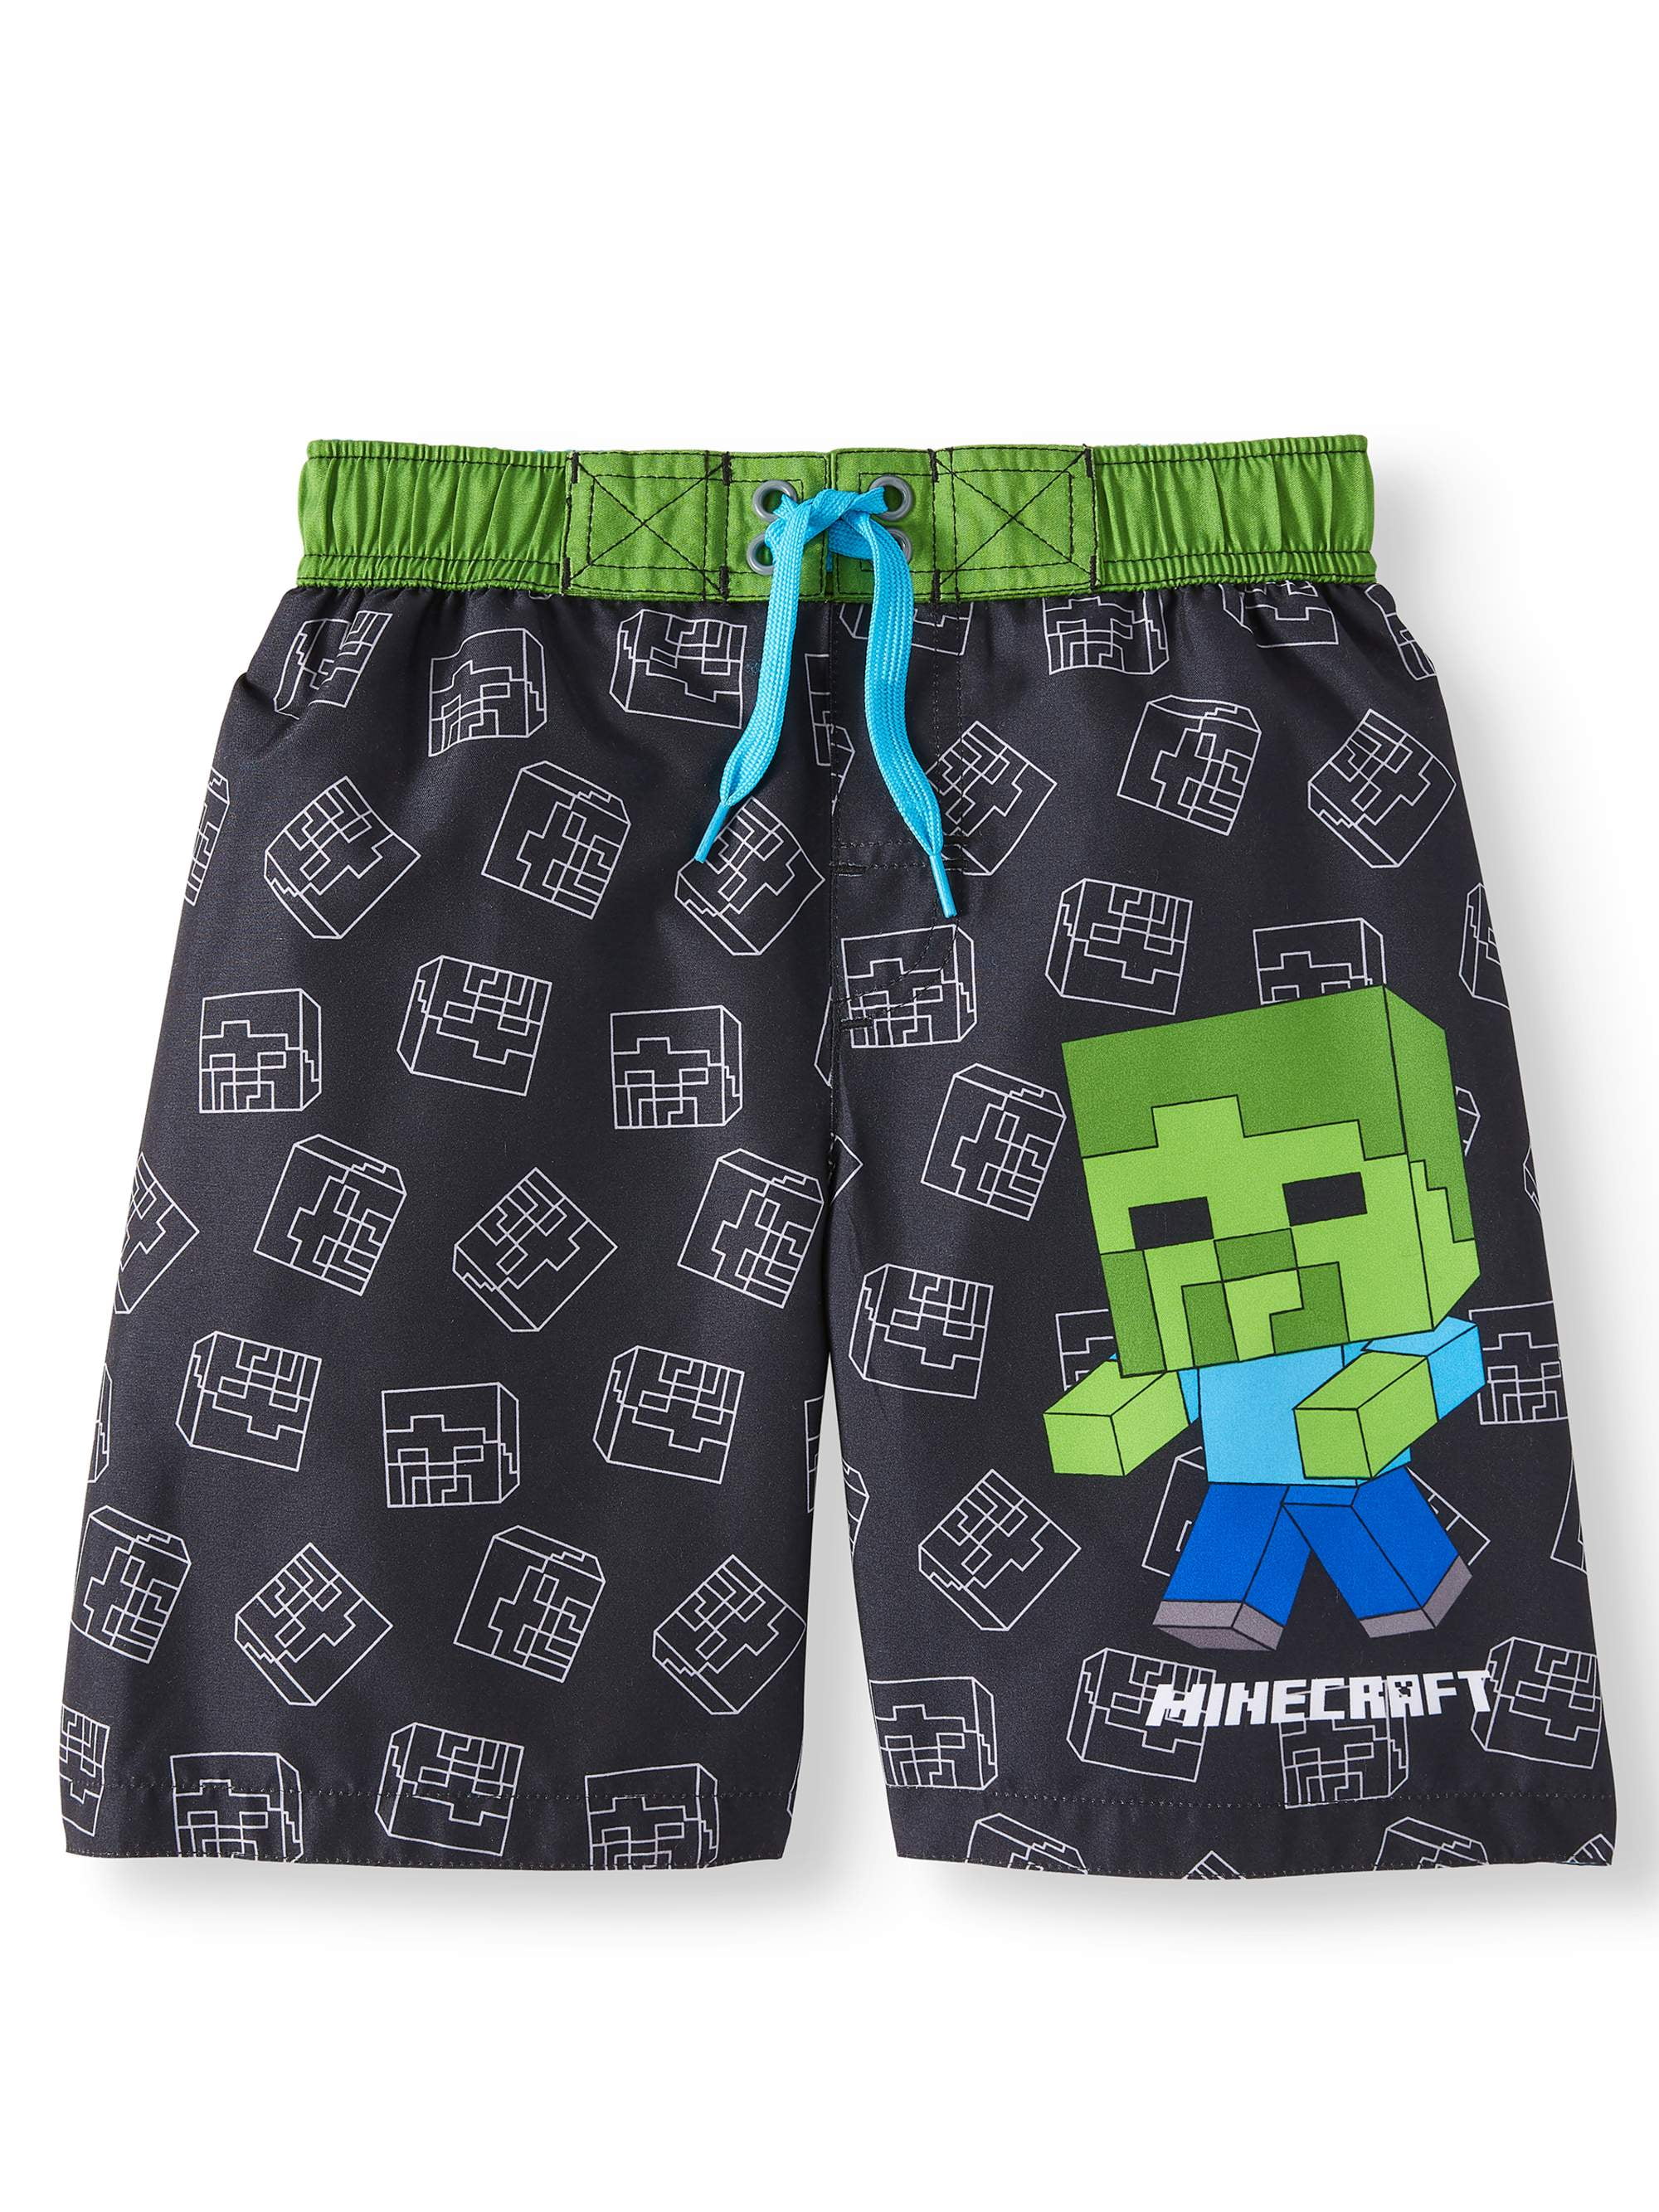 Boys Minecraft Swimming Trunks Kids Minecraft Swim Shorts Black Green 